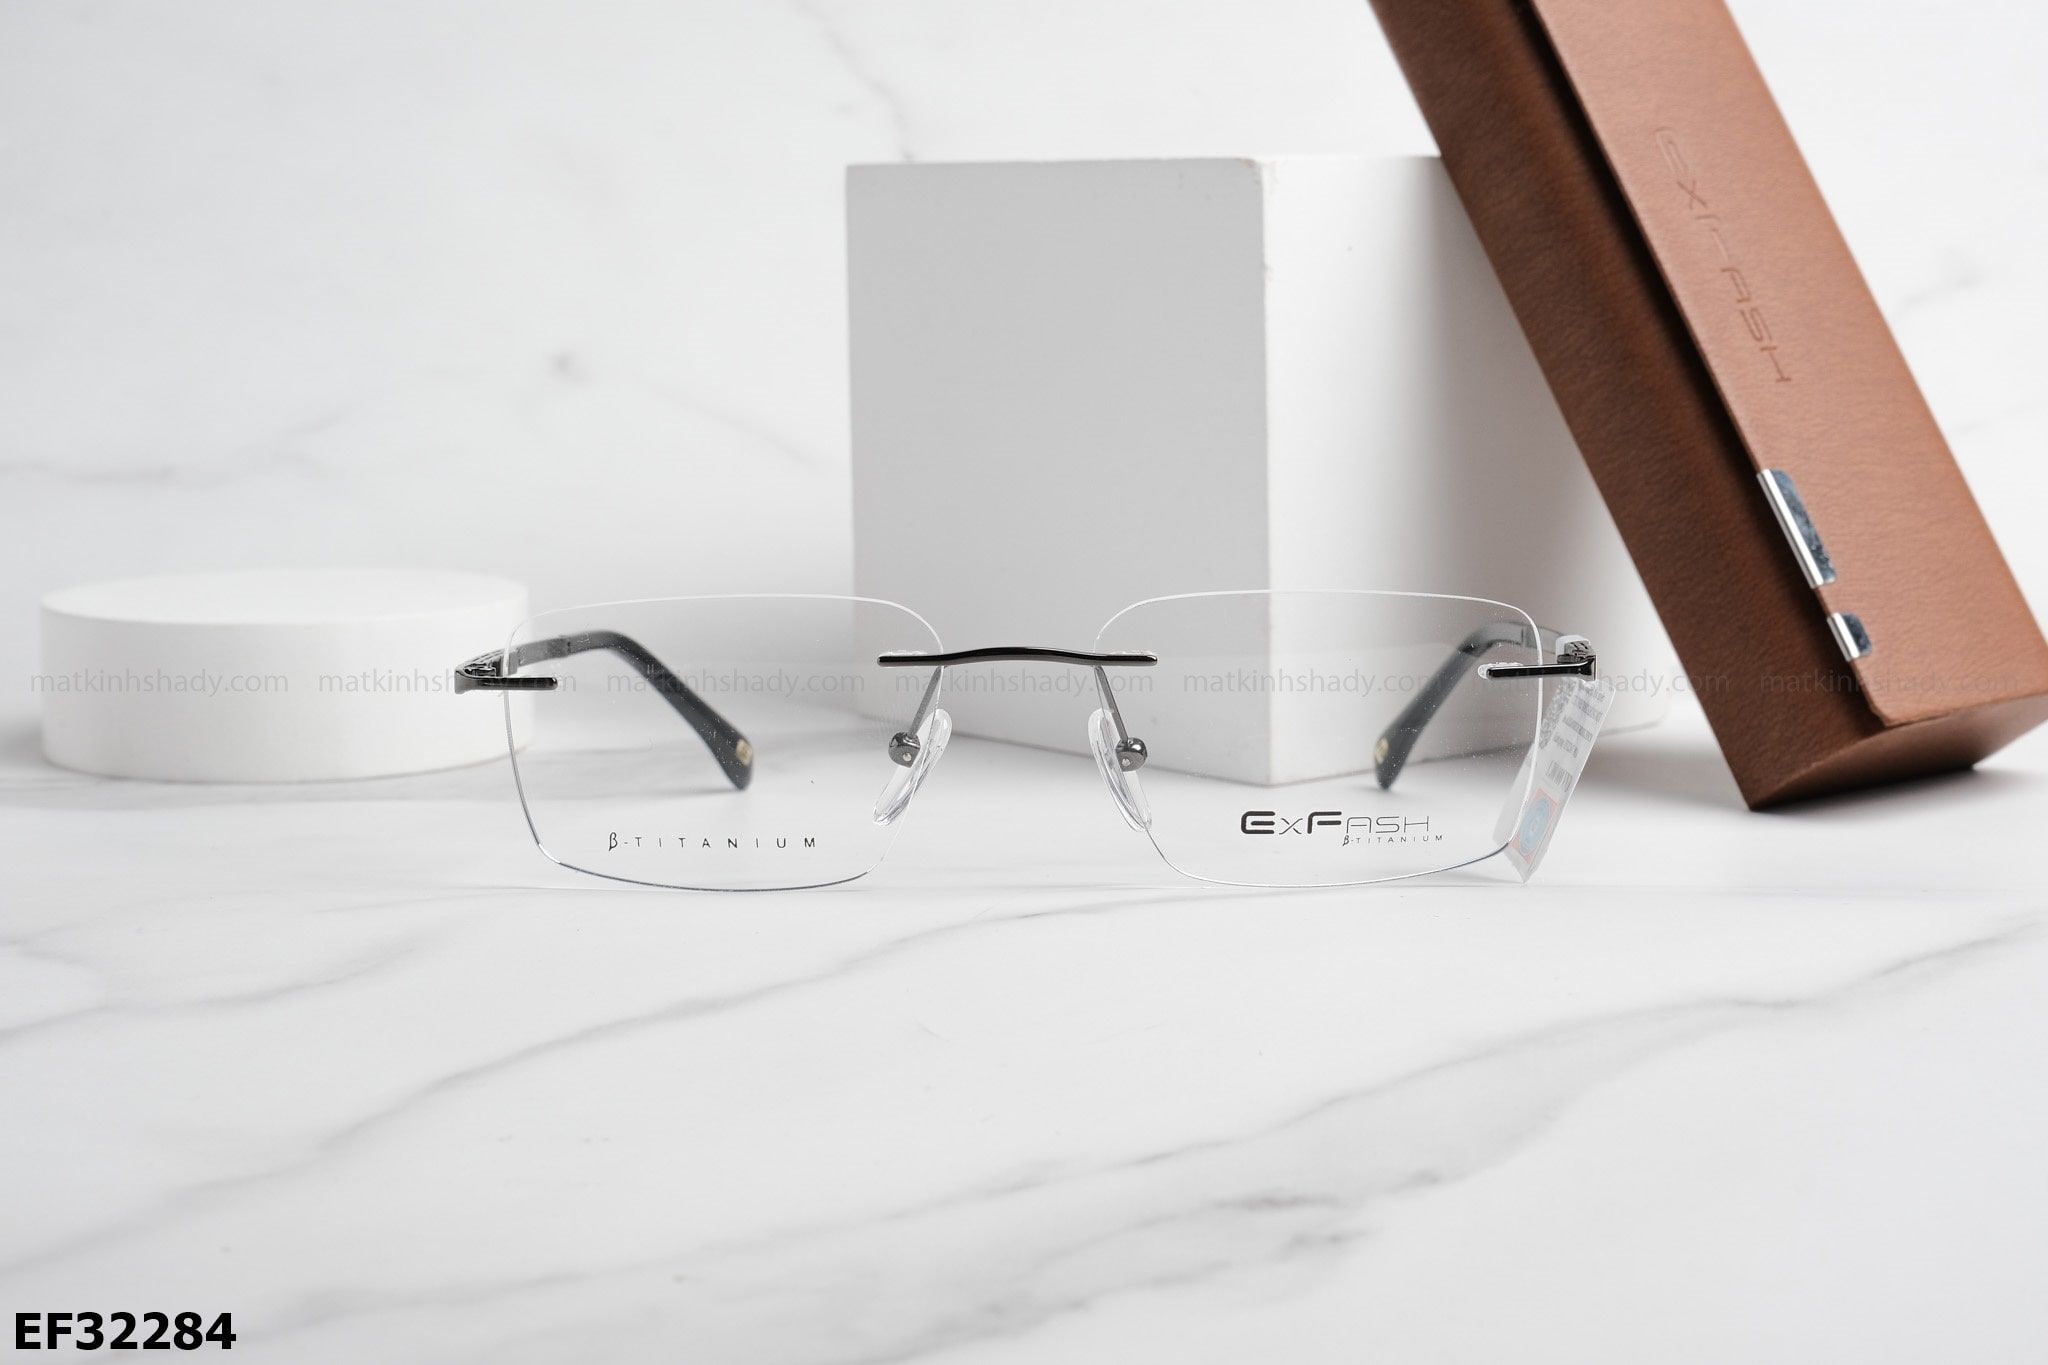  Exfash Eyewear - Glasses - EF32284 